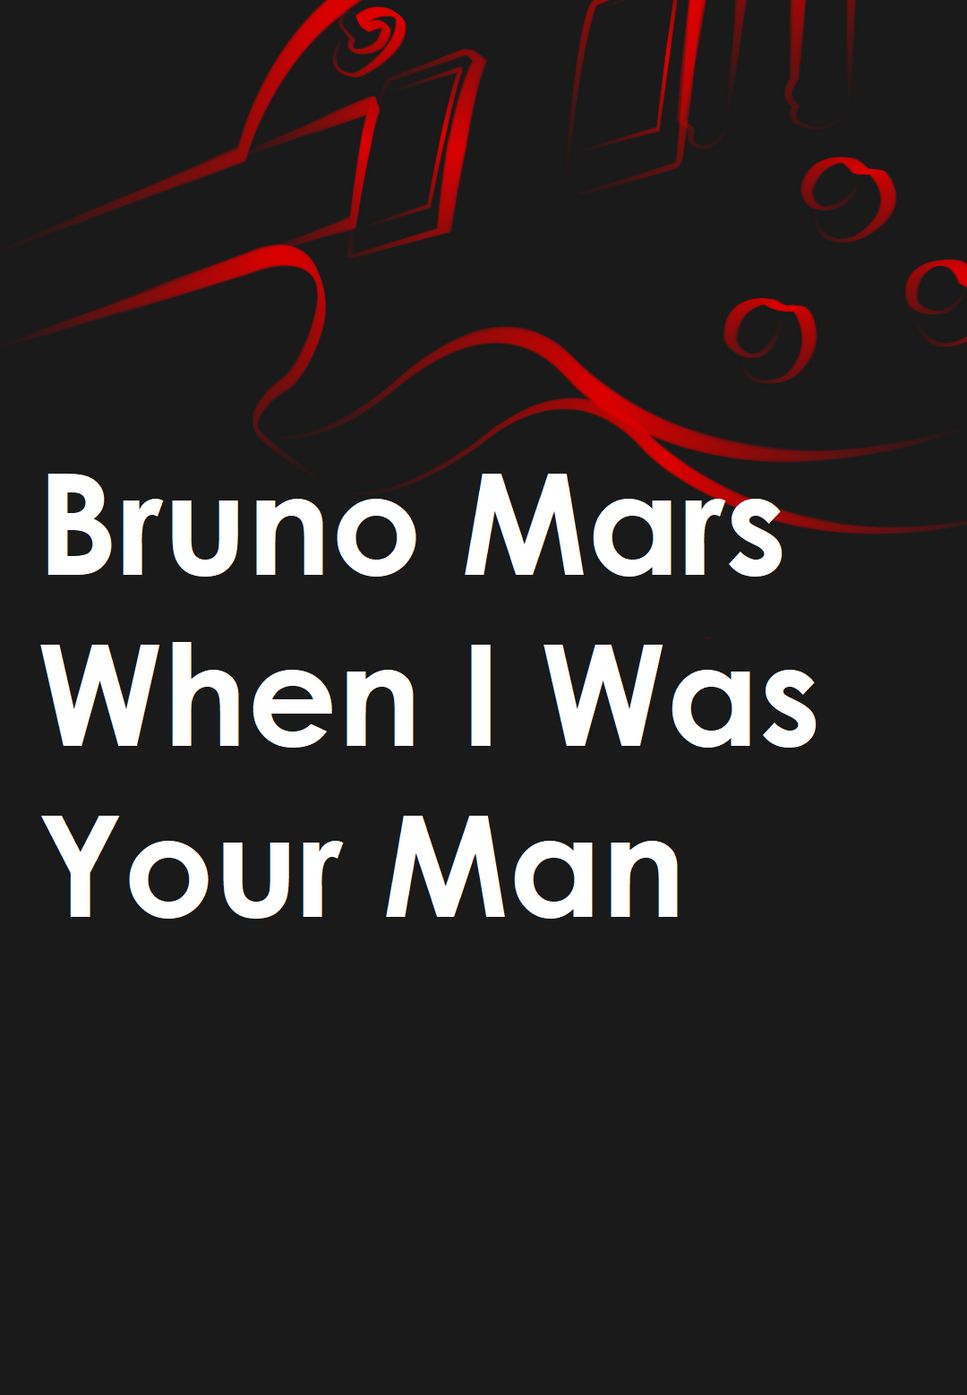 Bruno Mars - When I Was Your Man by Mario Serrato